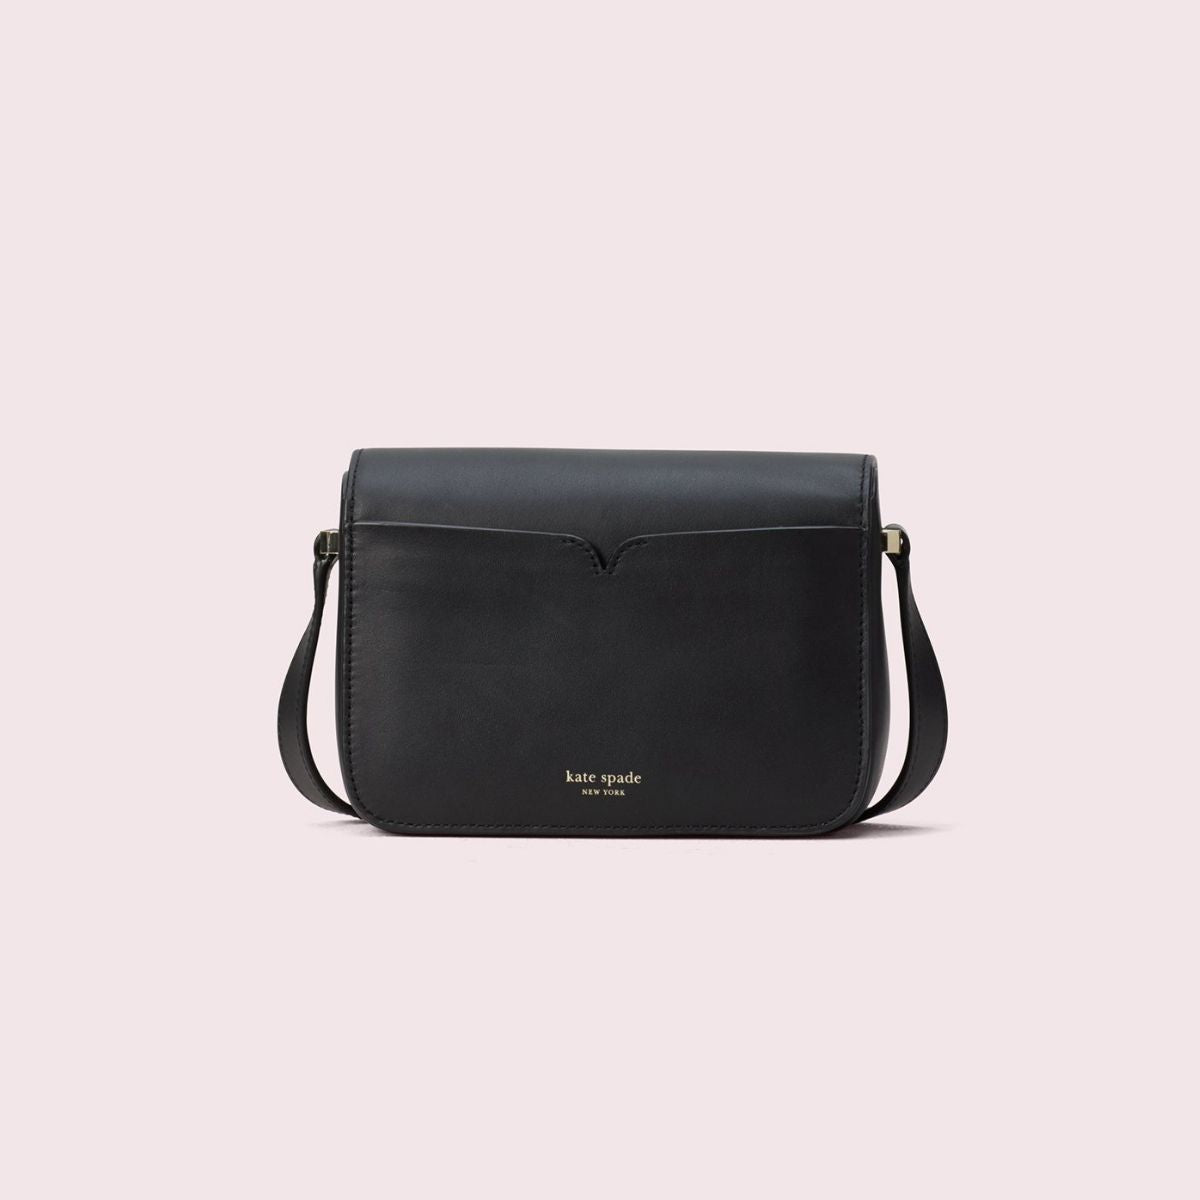 Kate Spade NY Small Black Leather Handbag / Shoulder bag